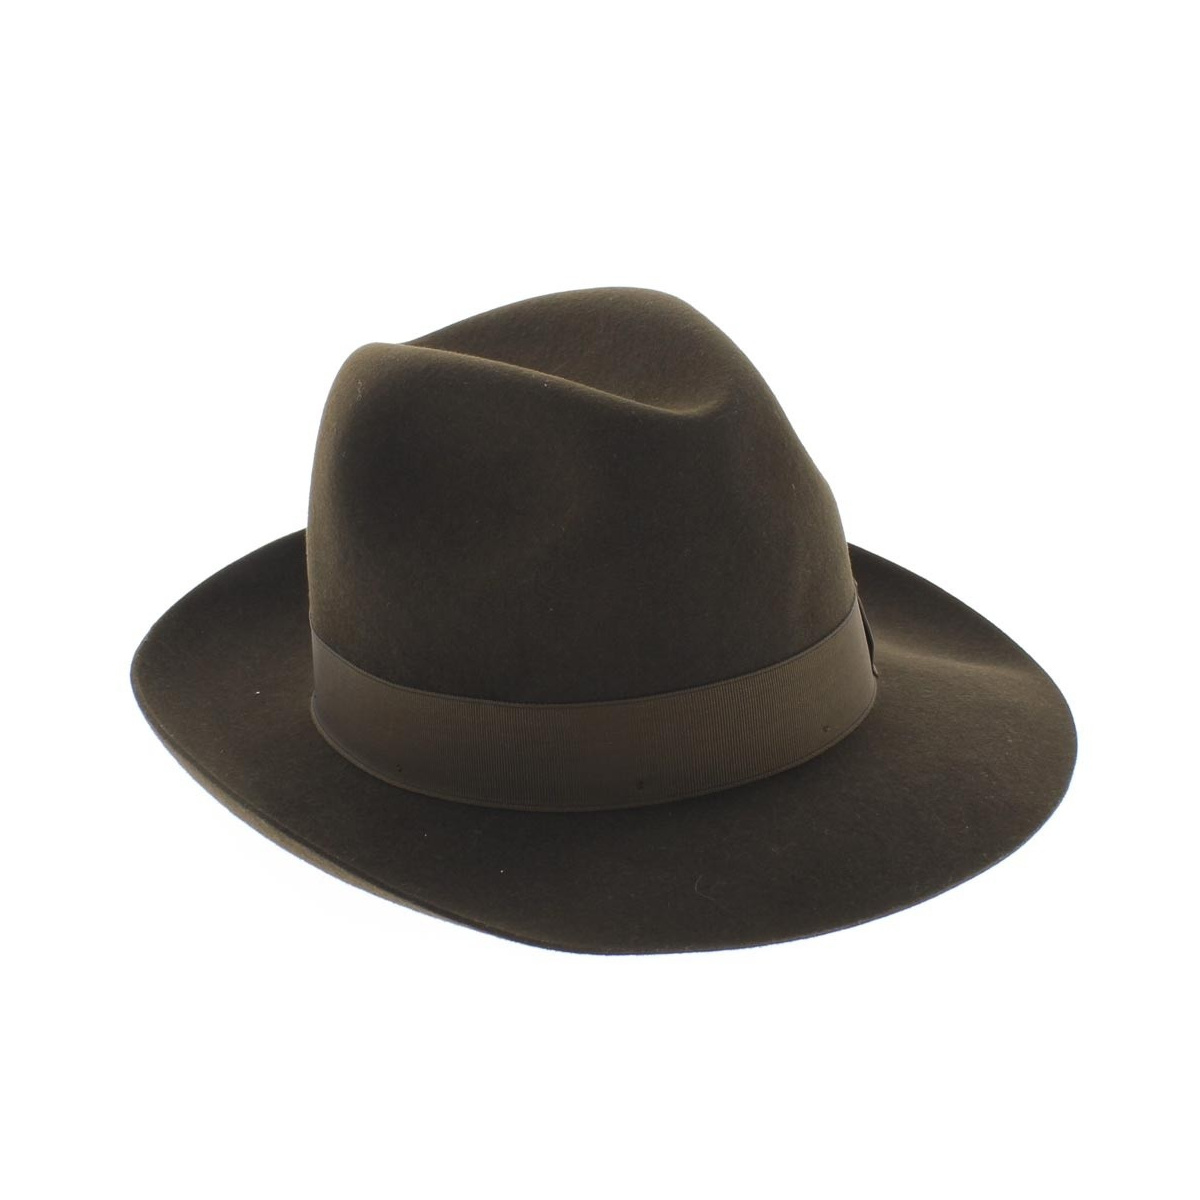 Chapeau en cuir homme chapeau trilby cuir marron New York